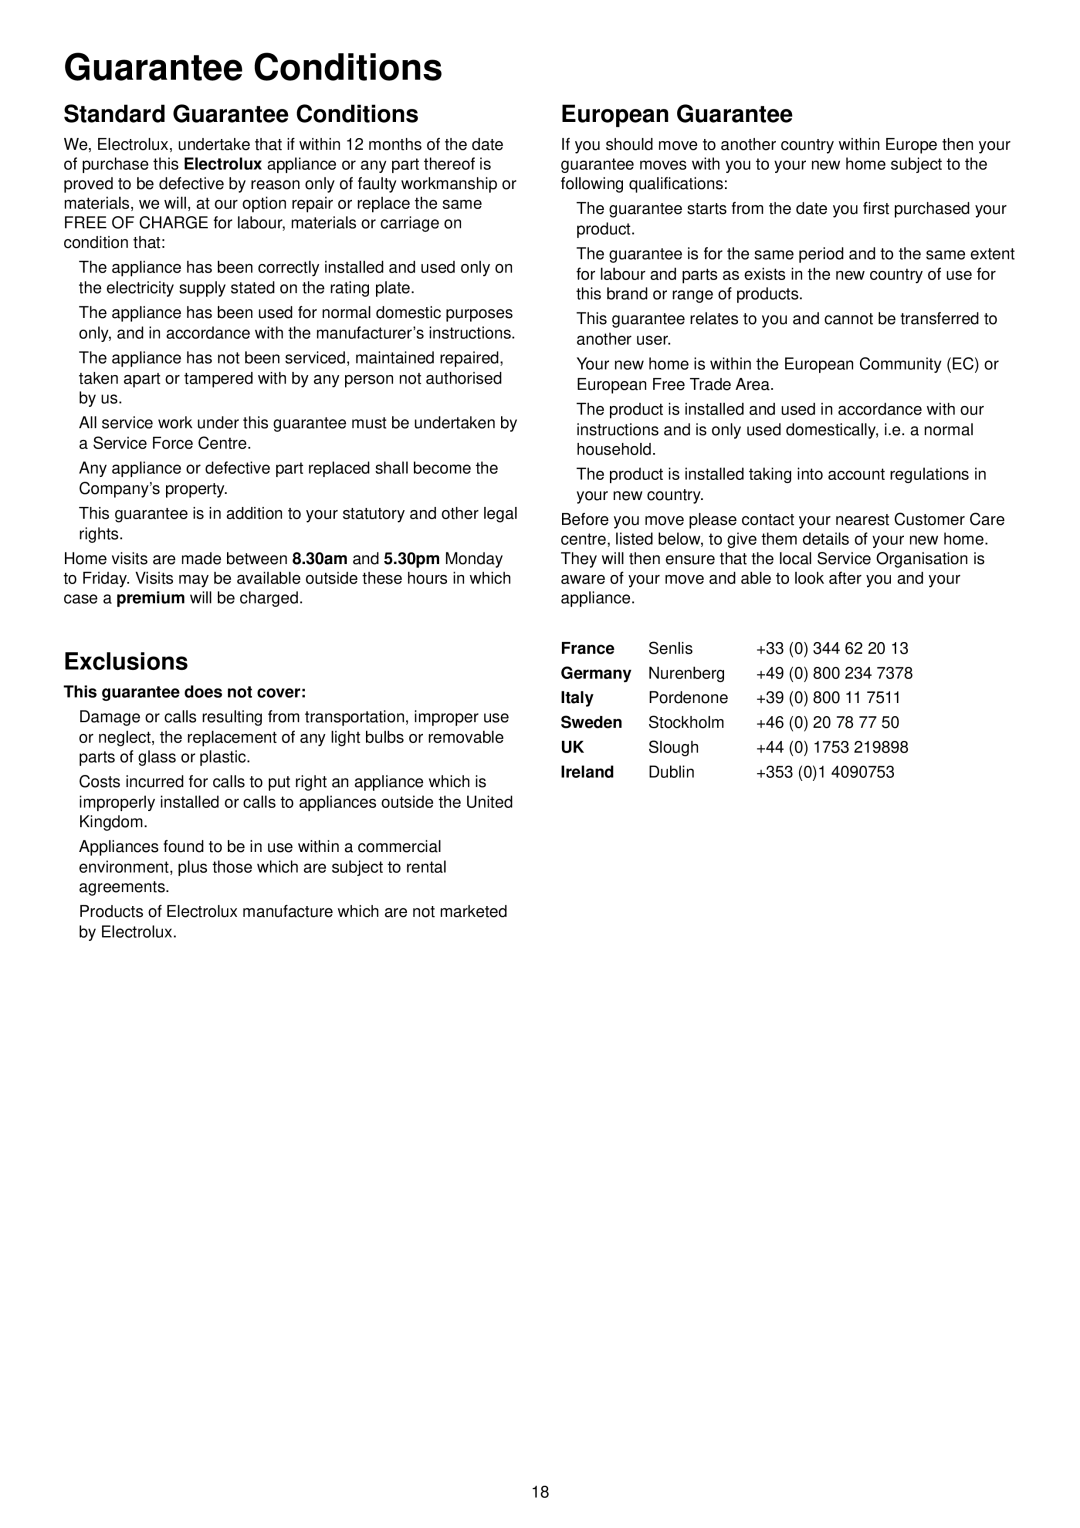 Electrolux ESI 6105 manual Standard Guarantee Conditions, Exclusions, European Guarantee 